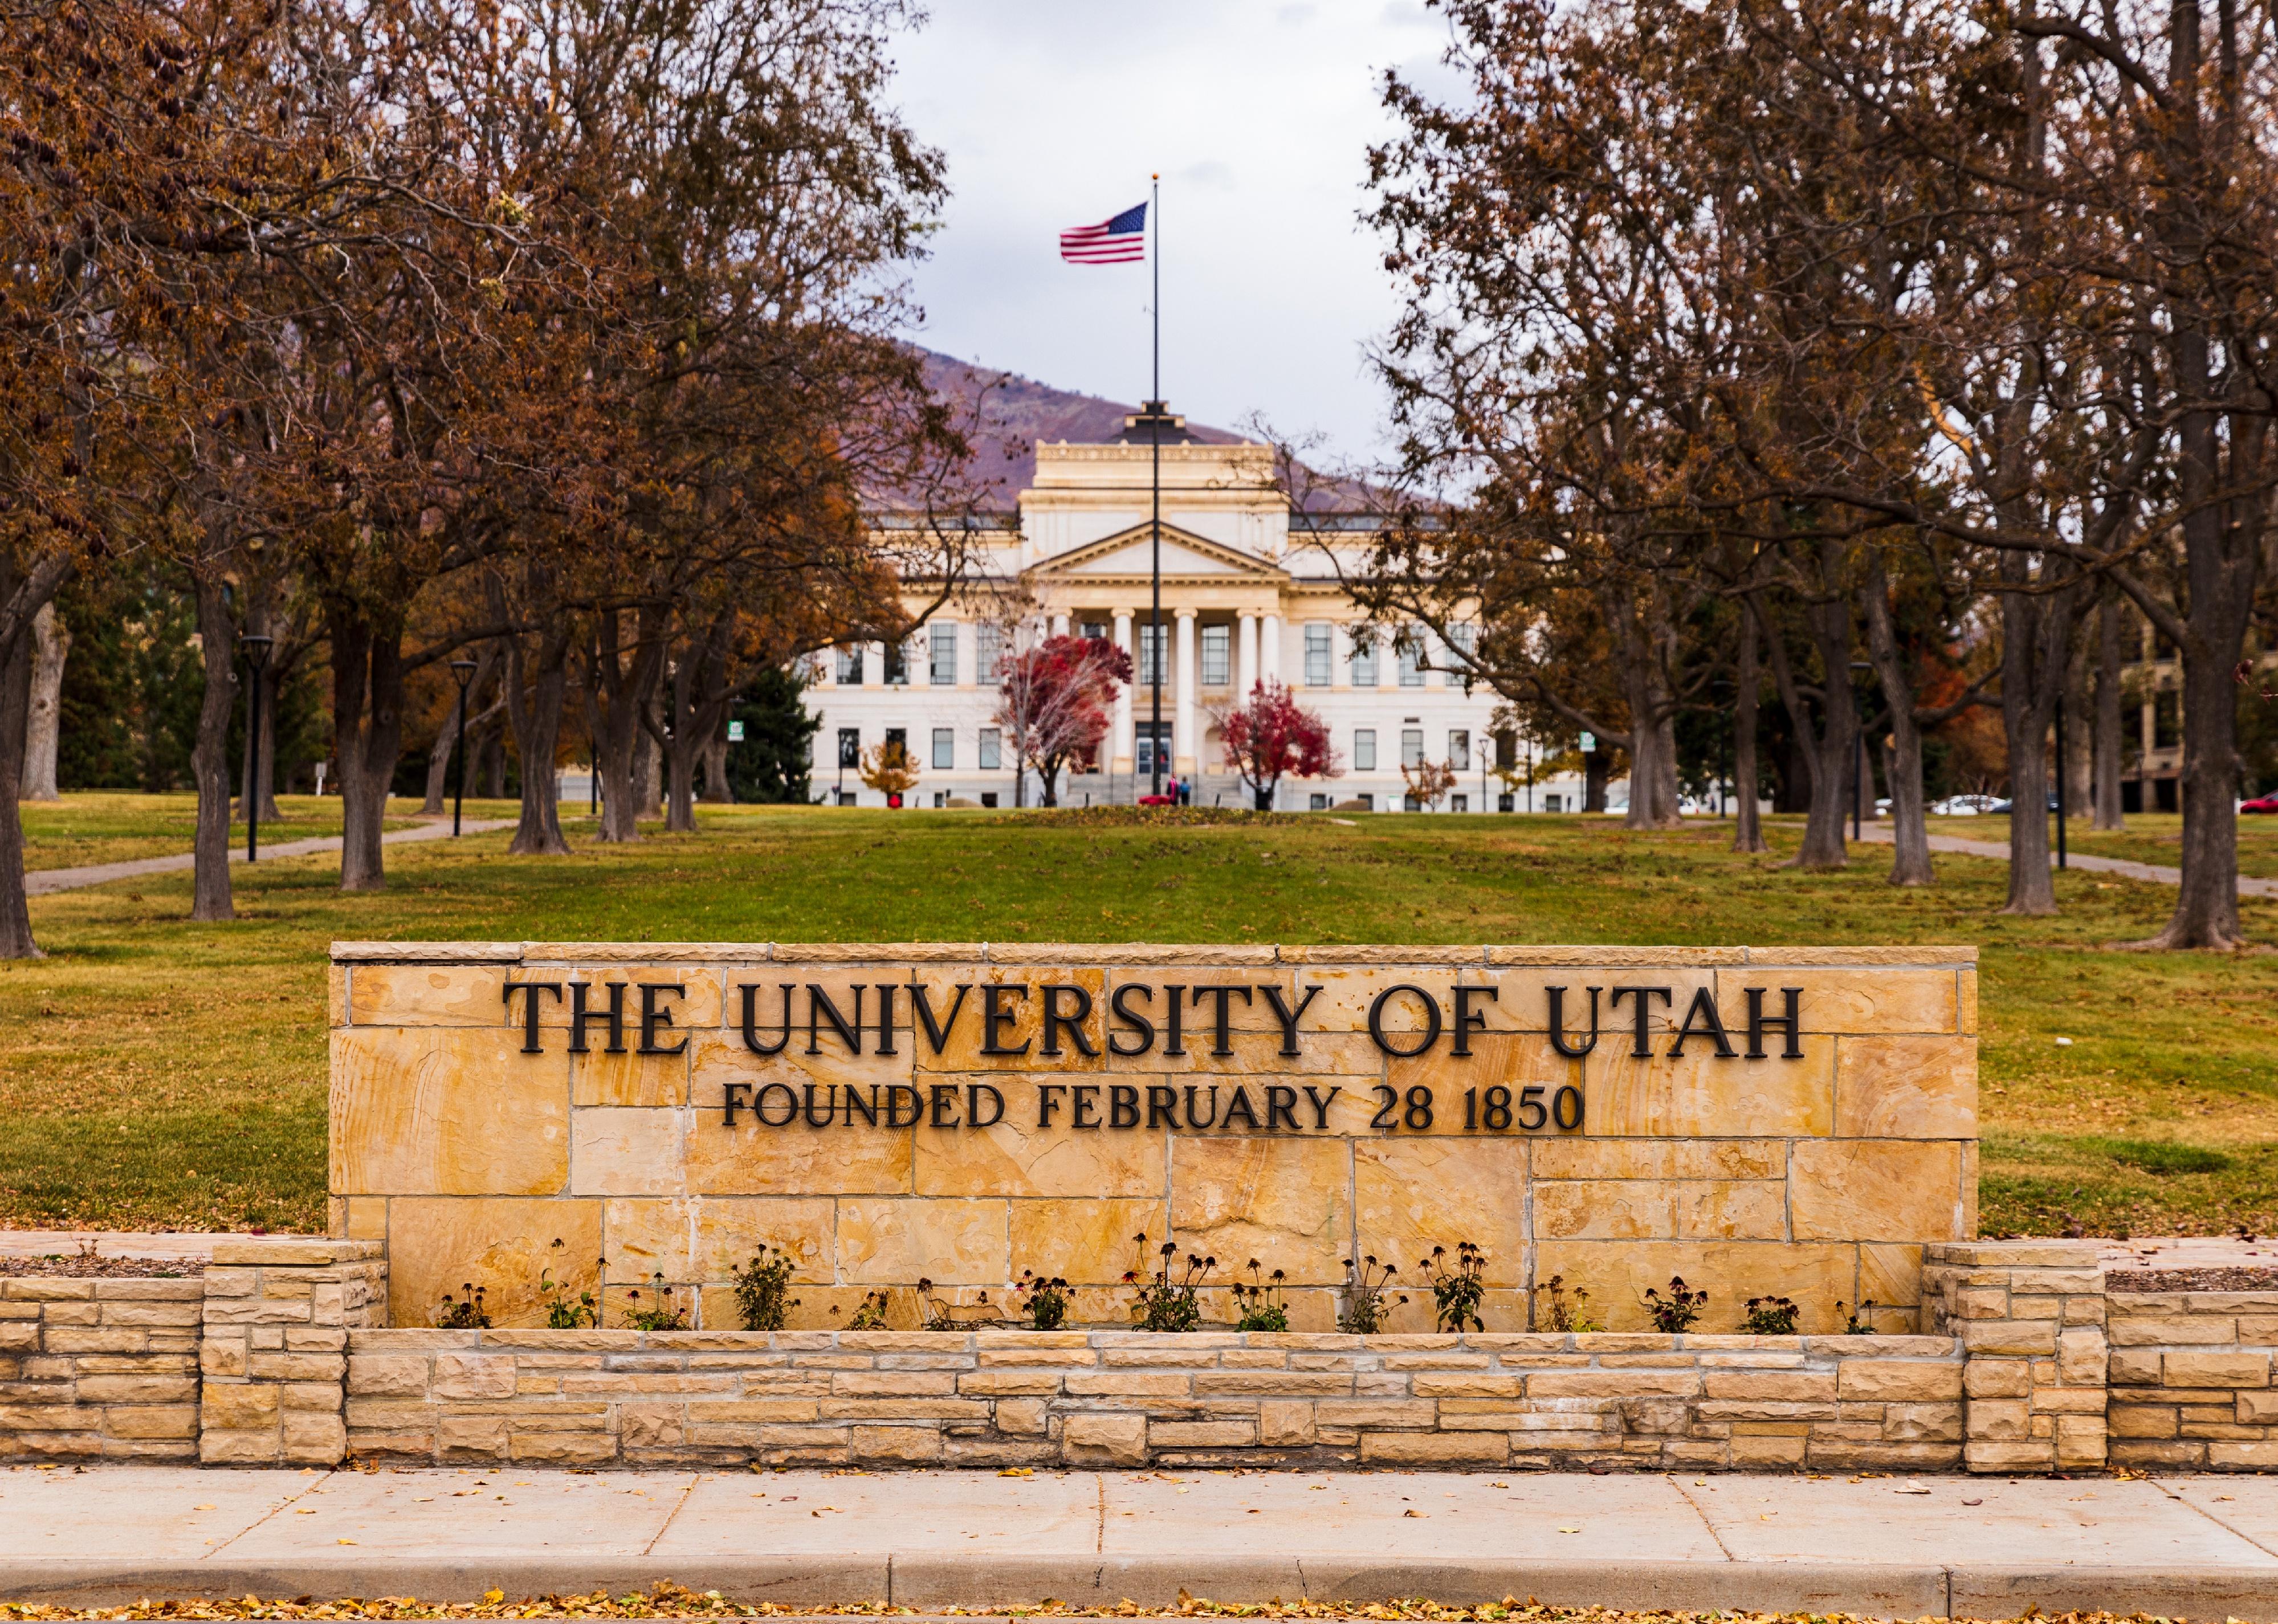 The University of Utah entrance sign.